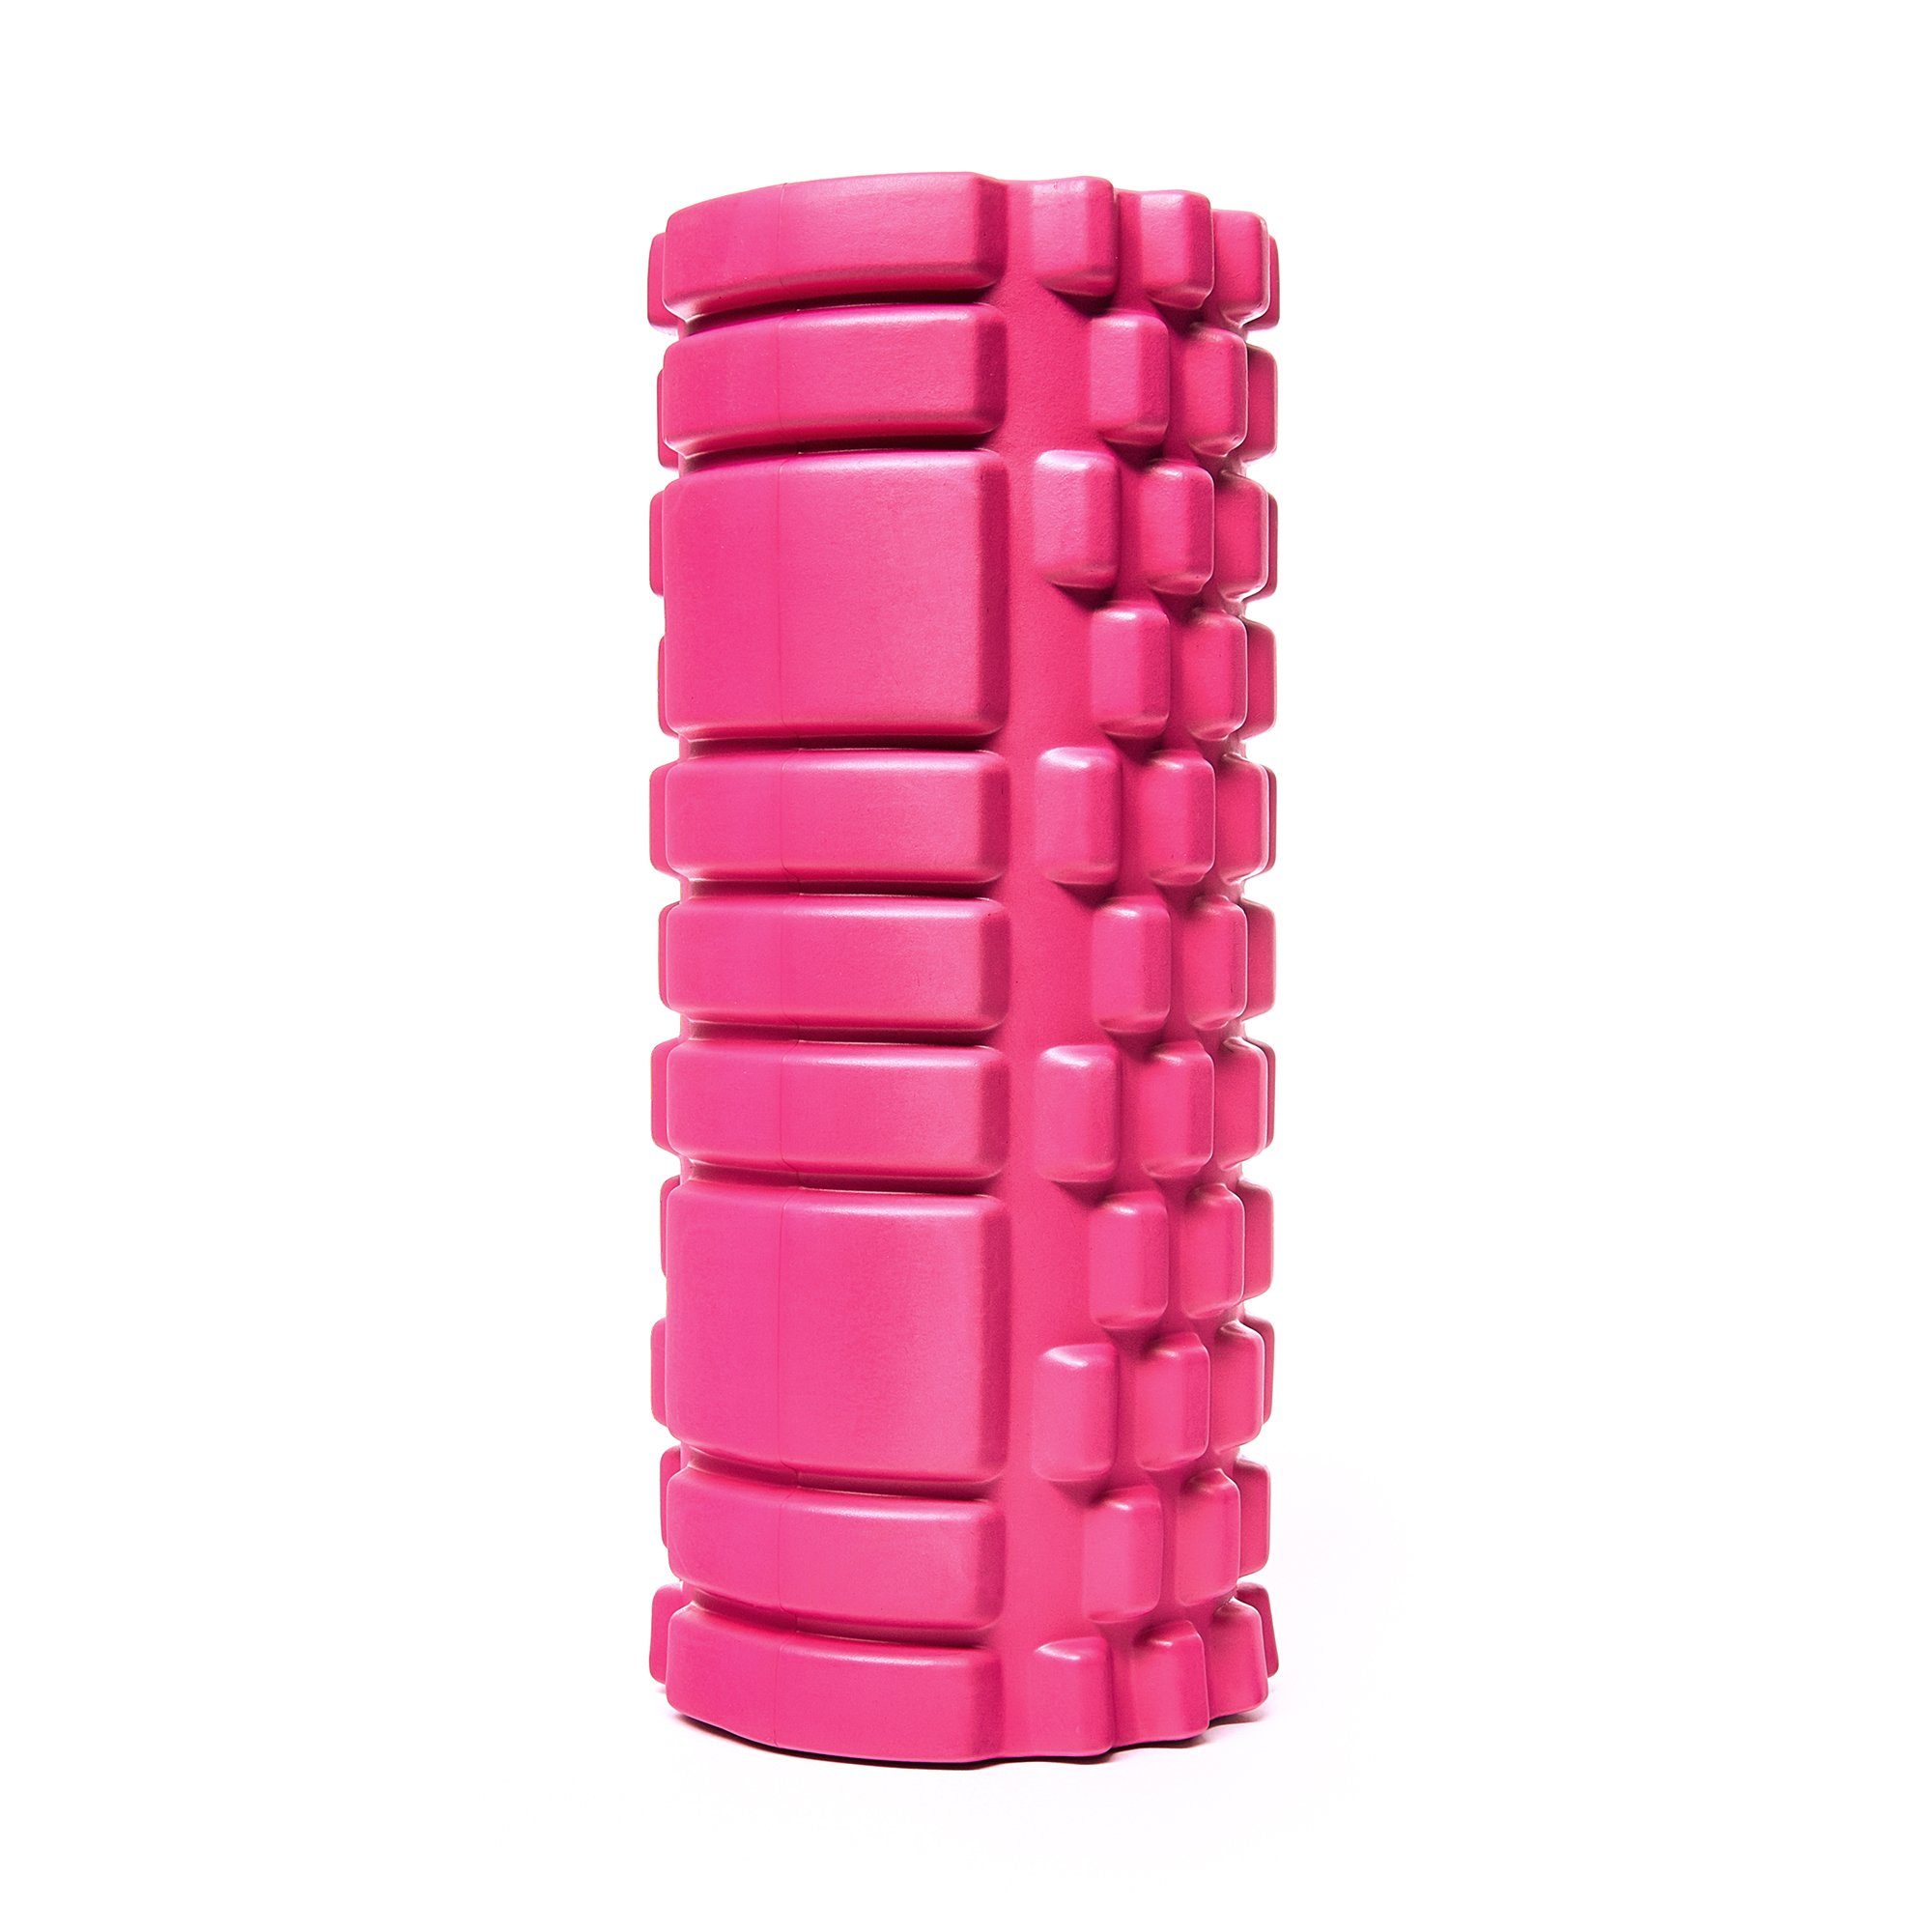 inkl. 34x14cm Faszienrolle Massagerolle Trainingsplan, Fitnessrolle Anasuya pink #DoYourFitness